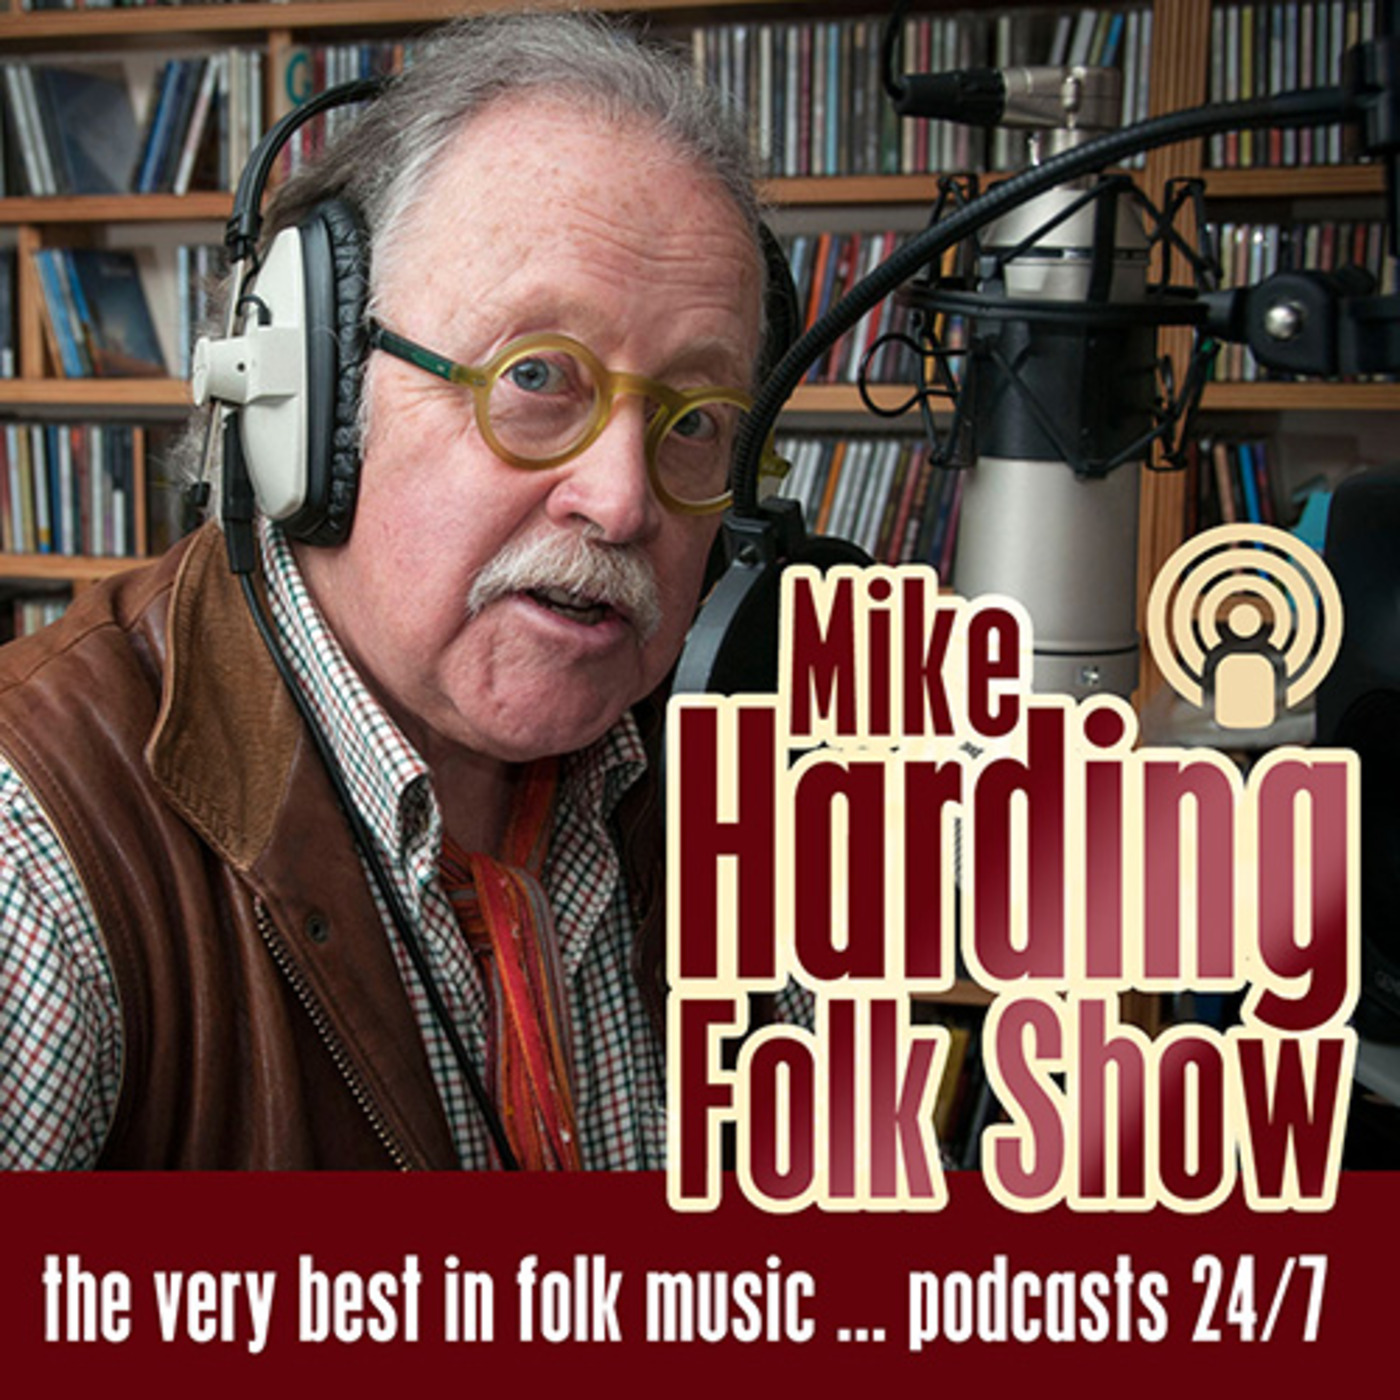 Mike Harding Folk Show 285